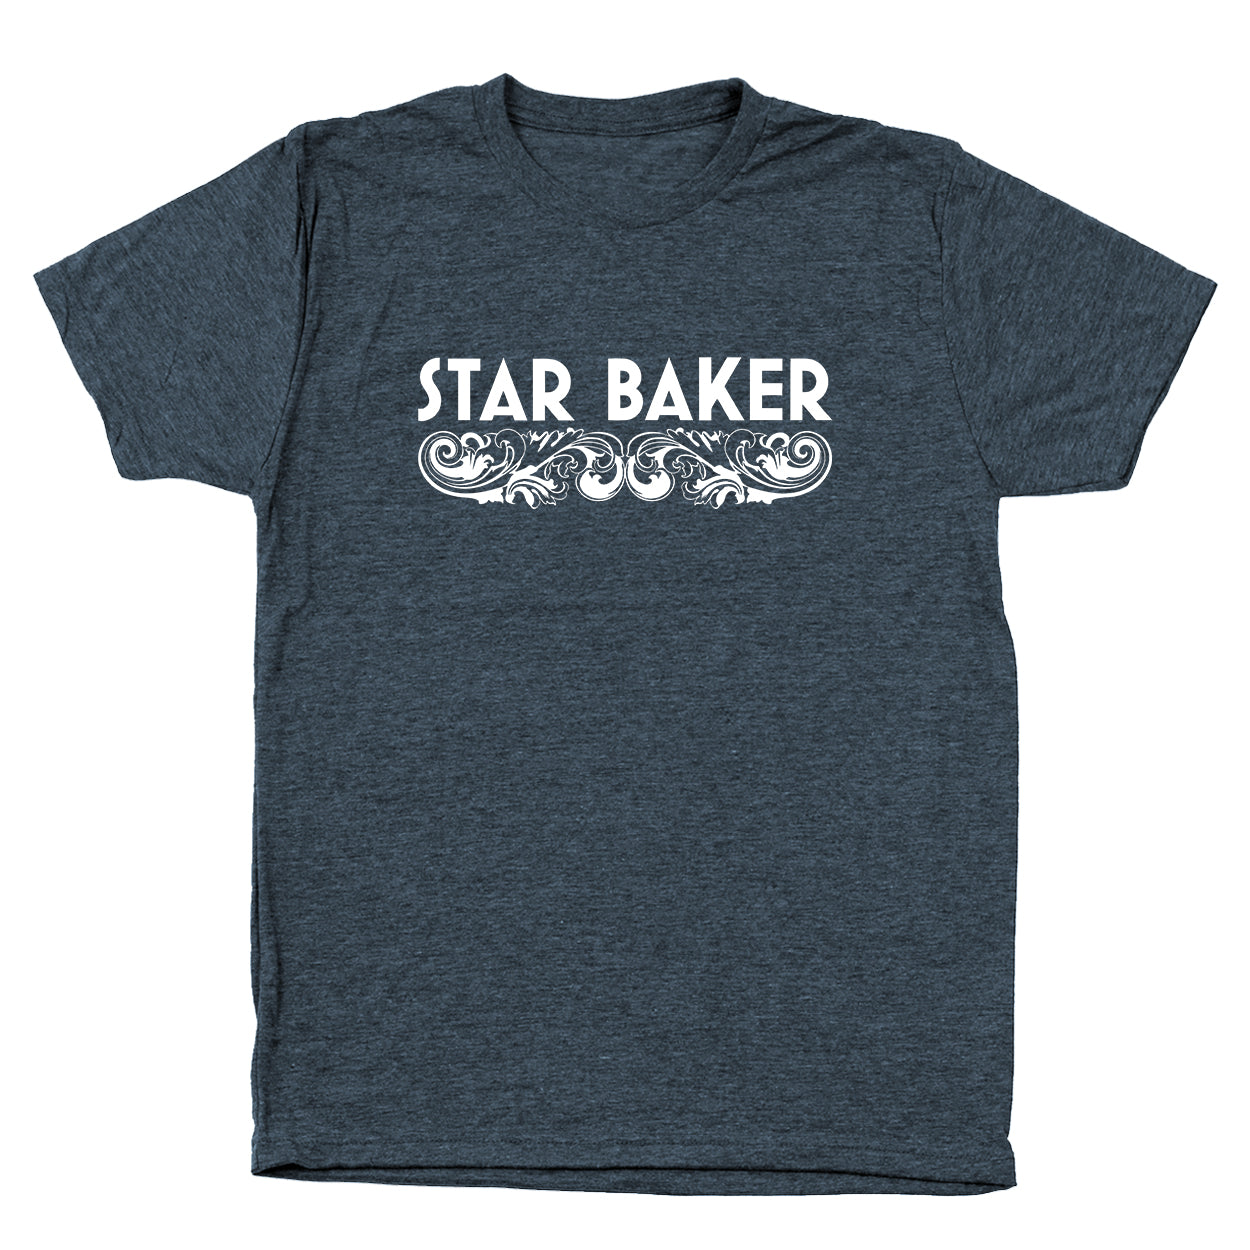 Star Baker Tshirt - Donkey Tees